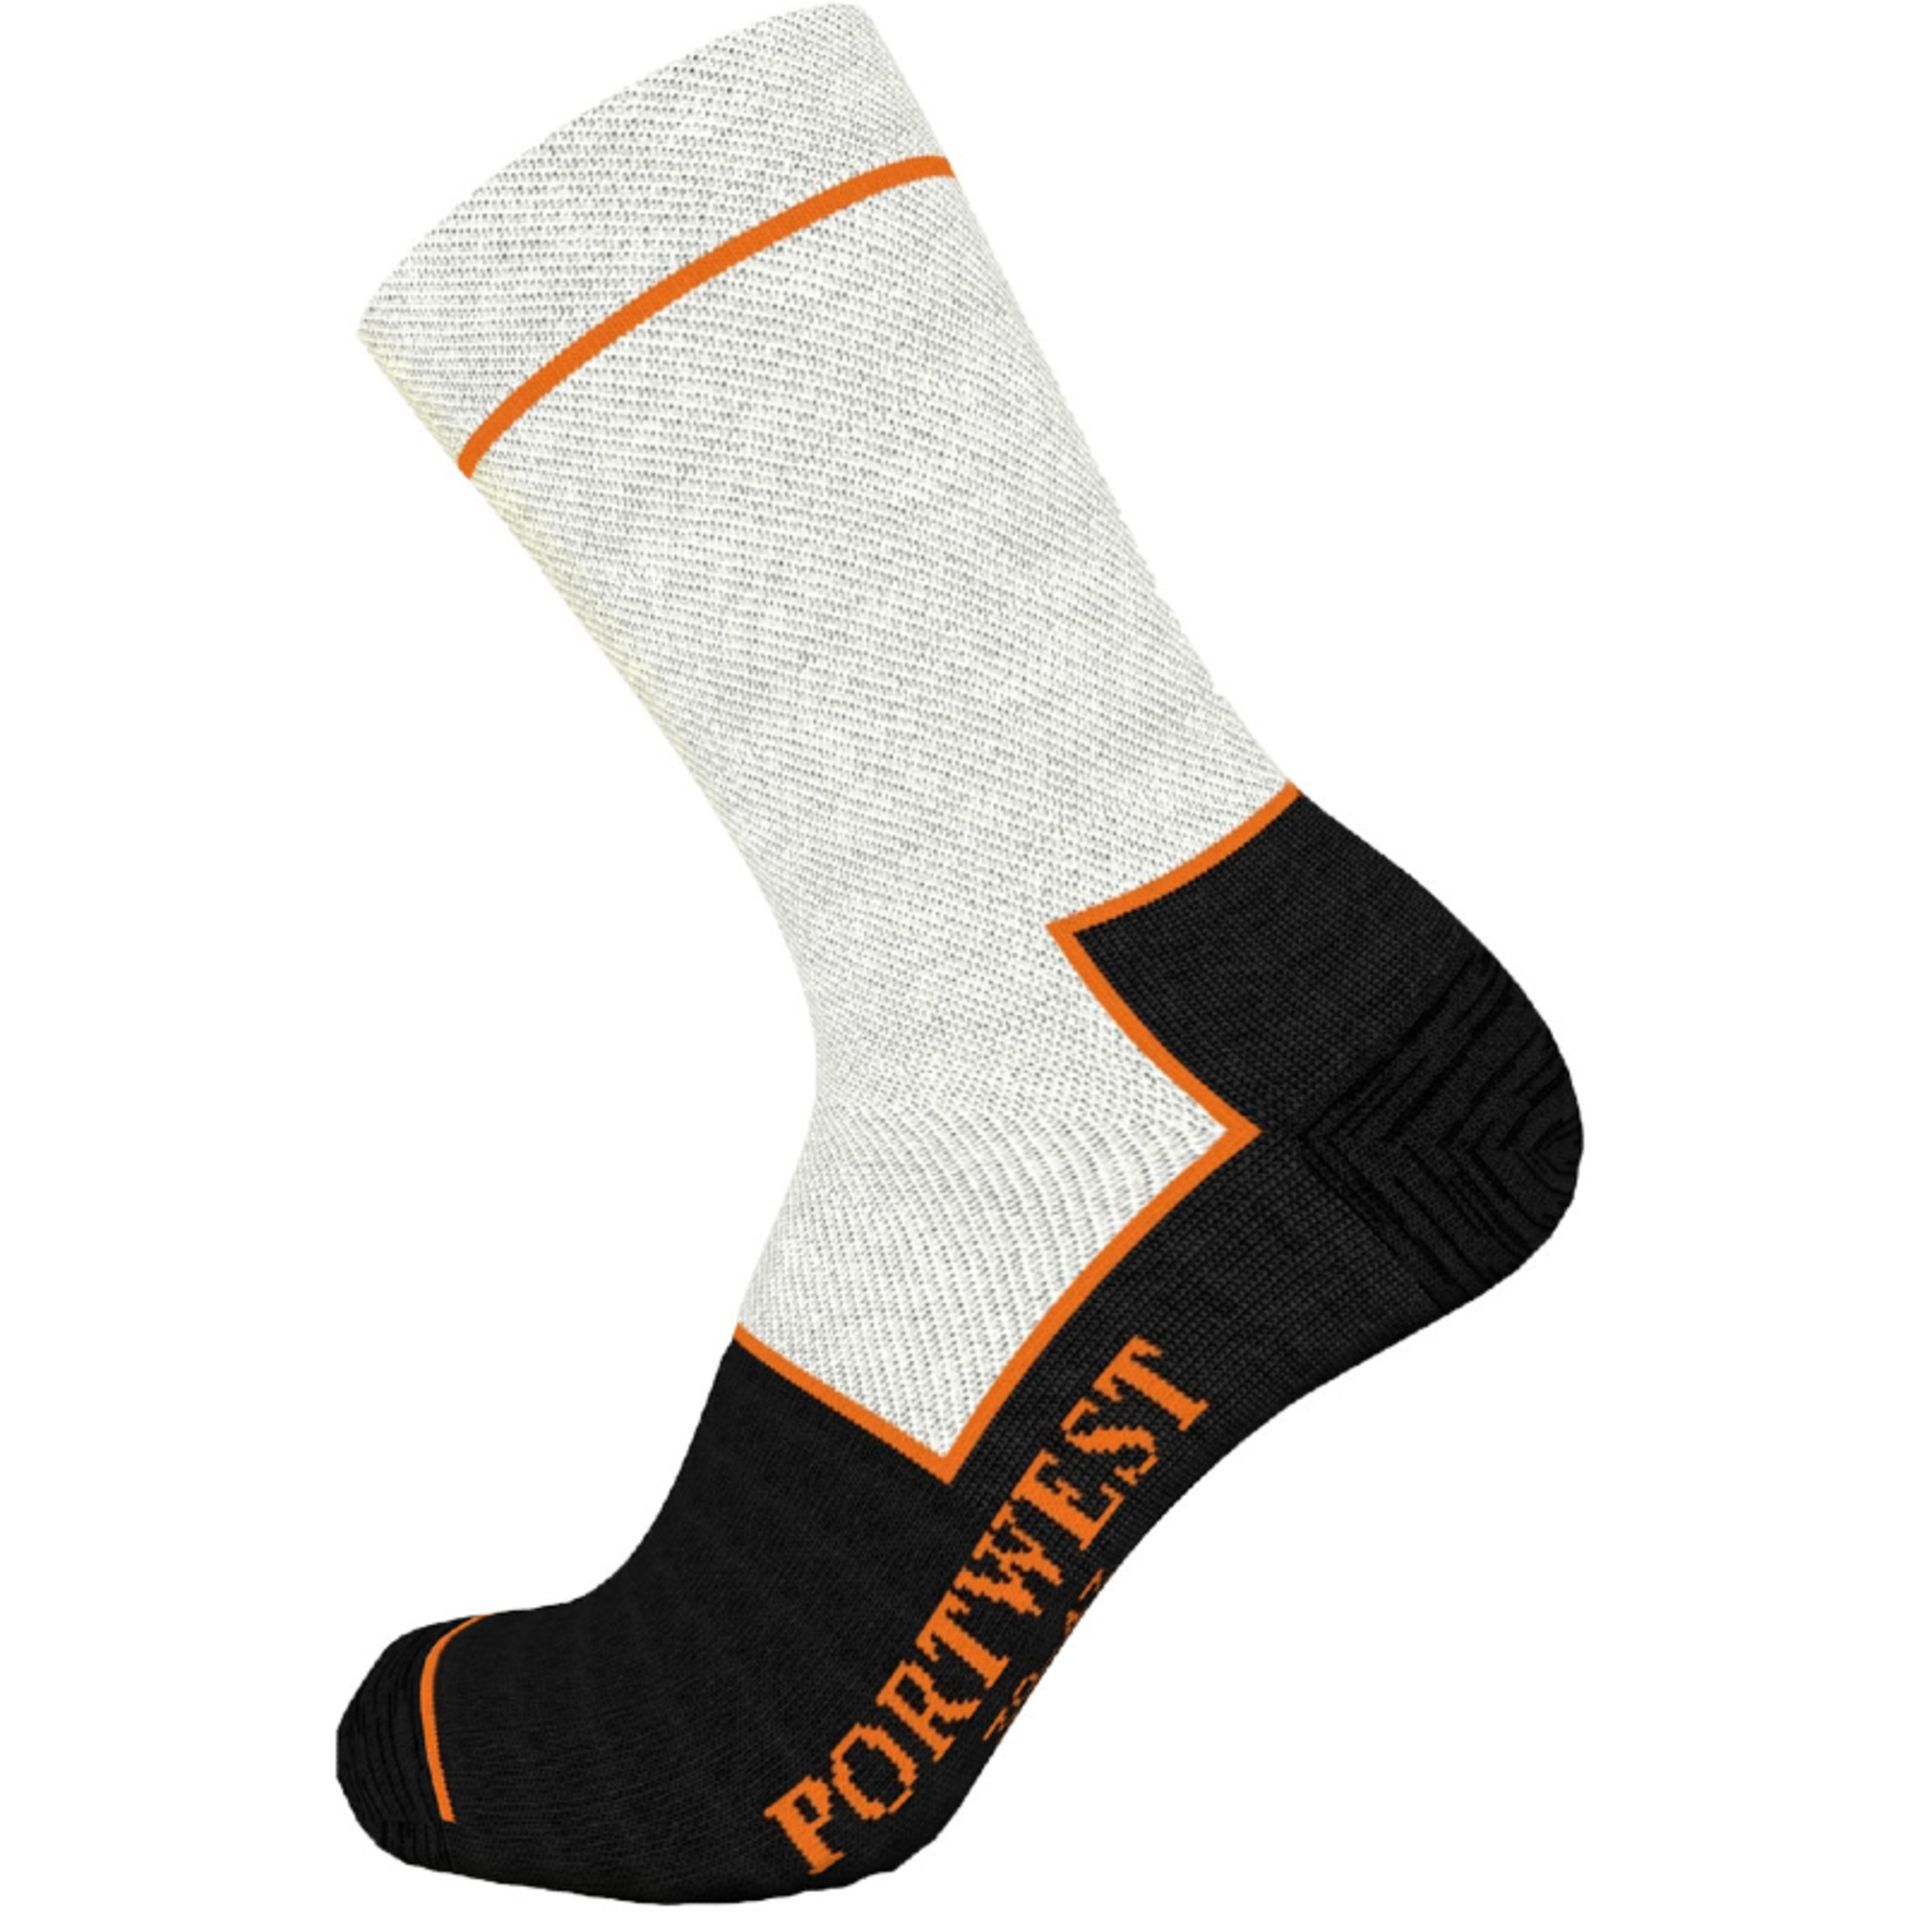 15 x Portwest Cut Resistant Professional Work Socks Size 6-9 RRP £18.25 ea